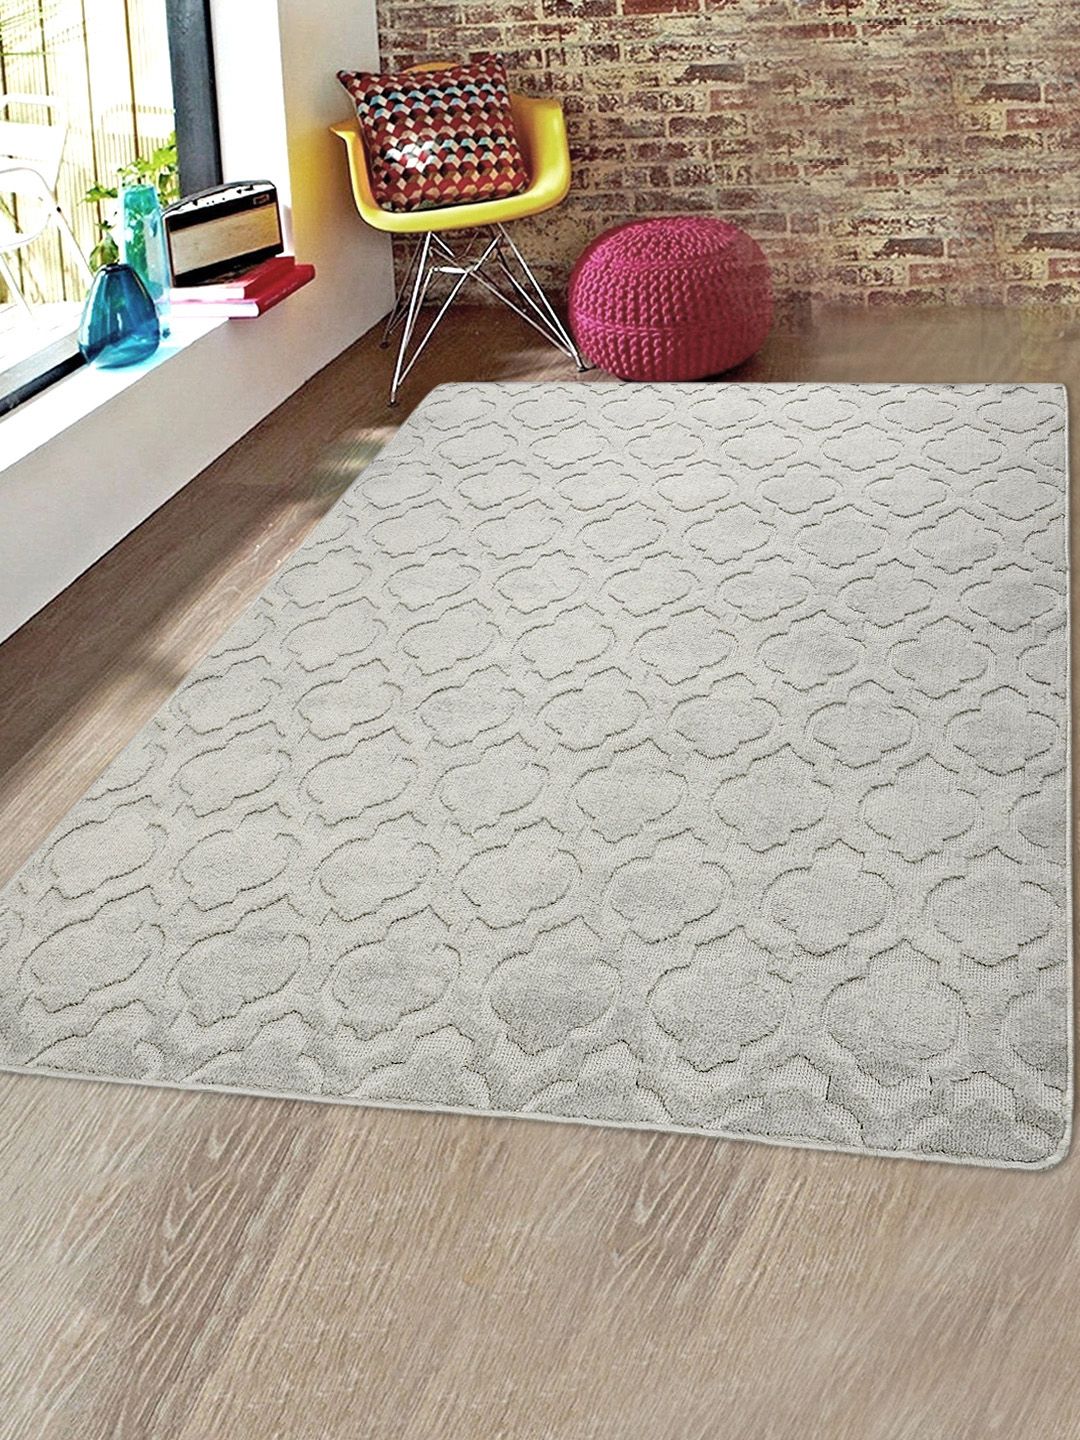 Saral Home Grey Solid Microfiber Anti-Skid Carpet Price in India